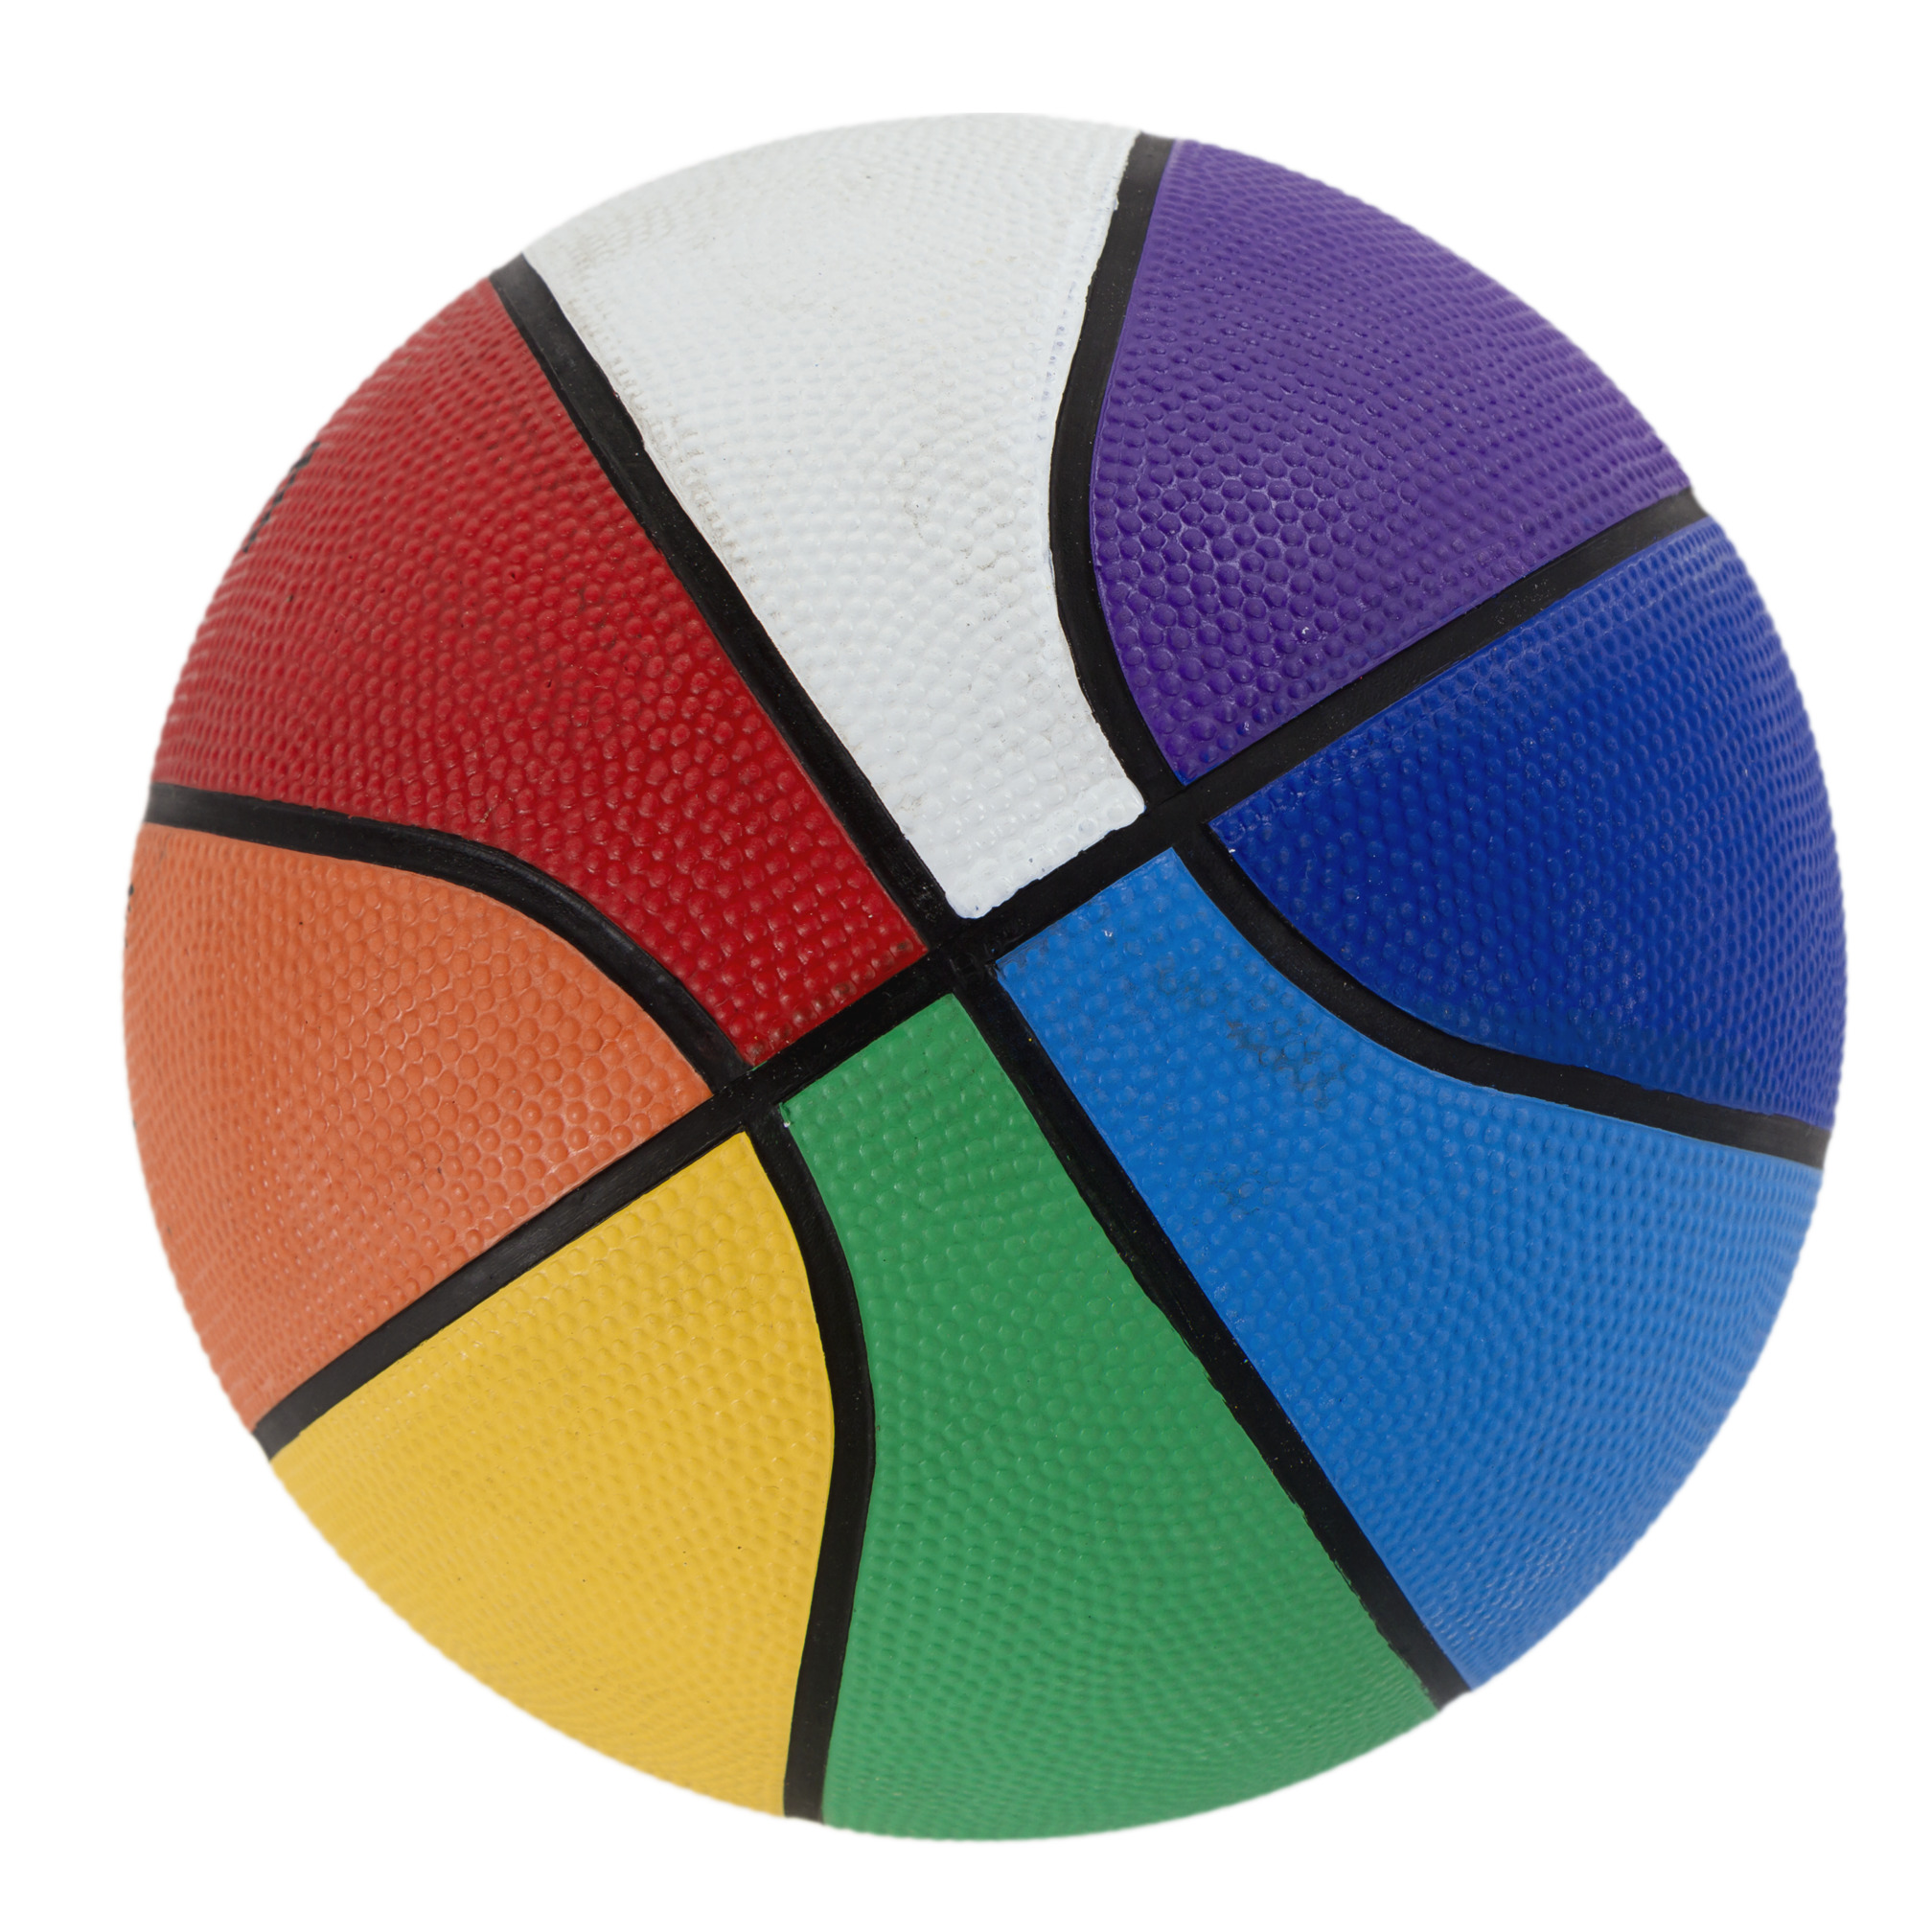 Nexan Basketball Rainbow, size 3